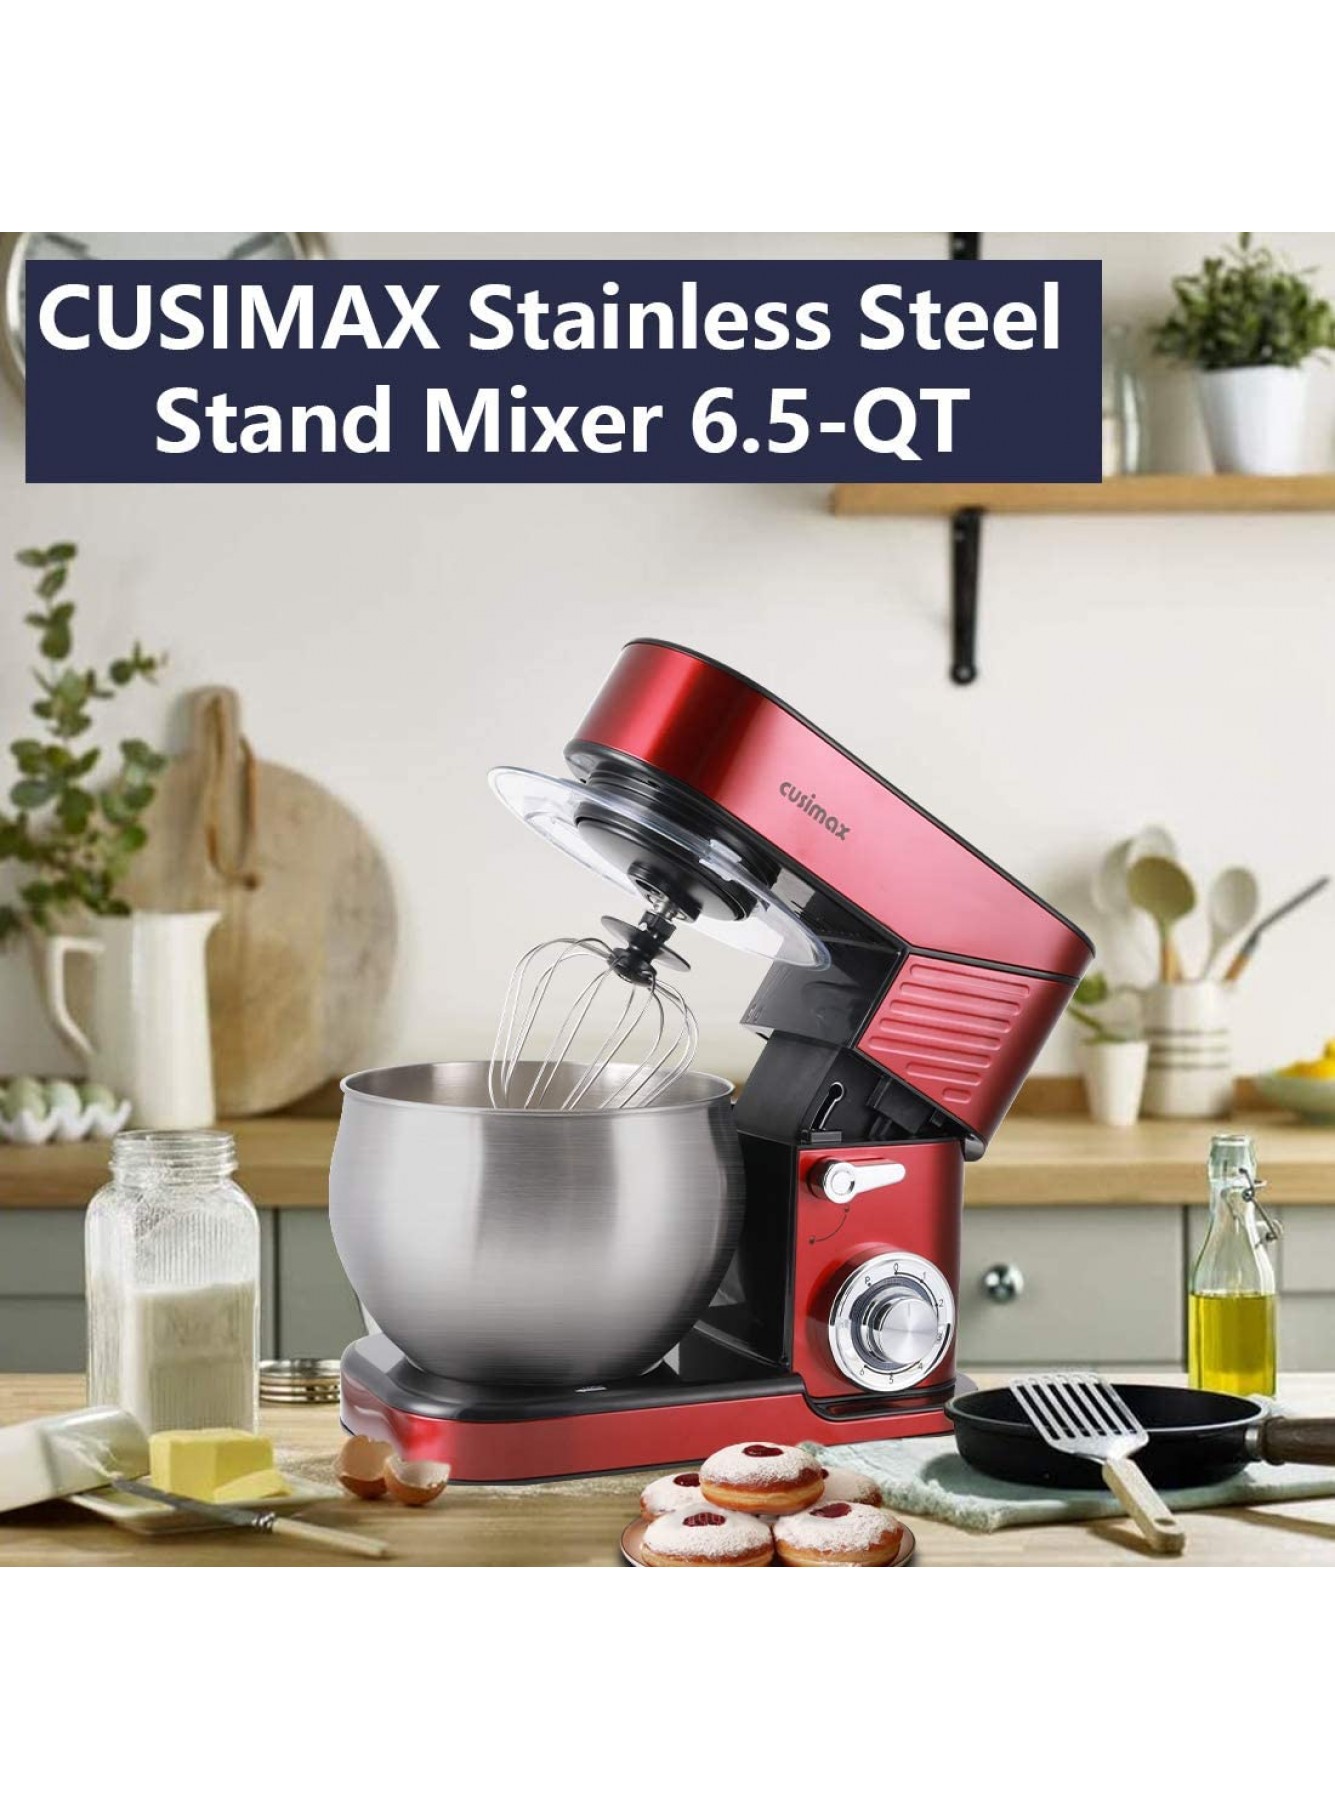 Stand Mixer, CUSIMAX 6.5QT Stainless Steel Mixer 6-Speeds Tilt-Head Dough  Mixers for Baking with Dough Hook, Wire Whisk & Flat Beater, Splash Guard